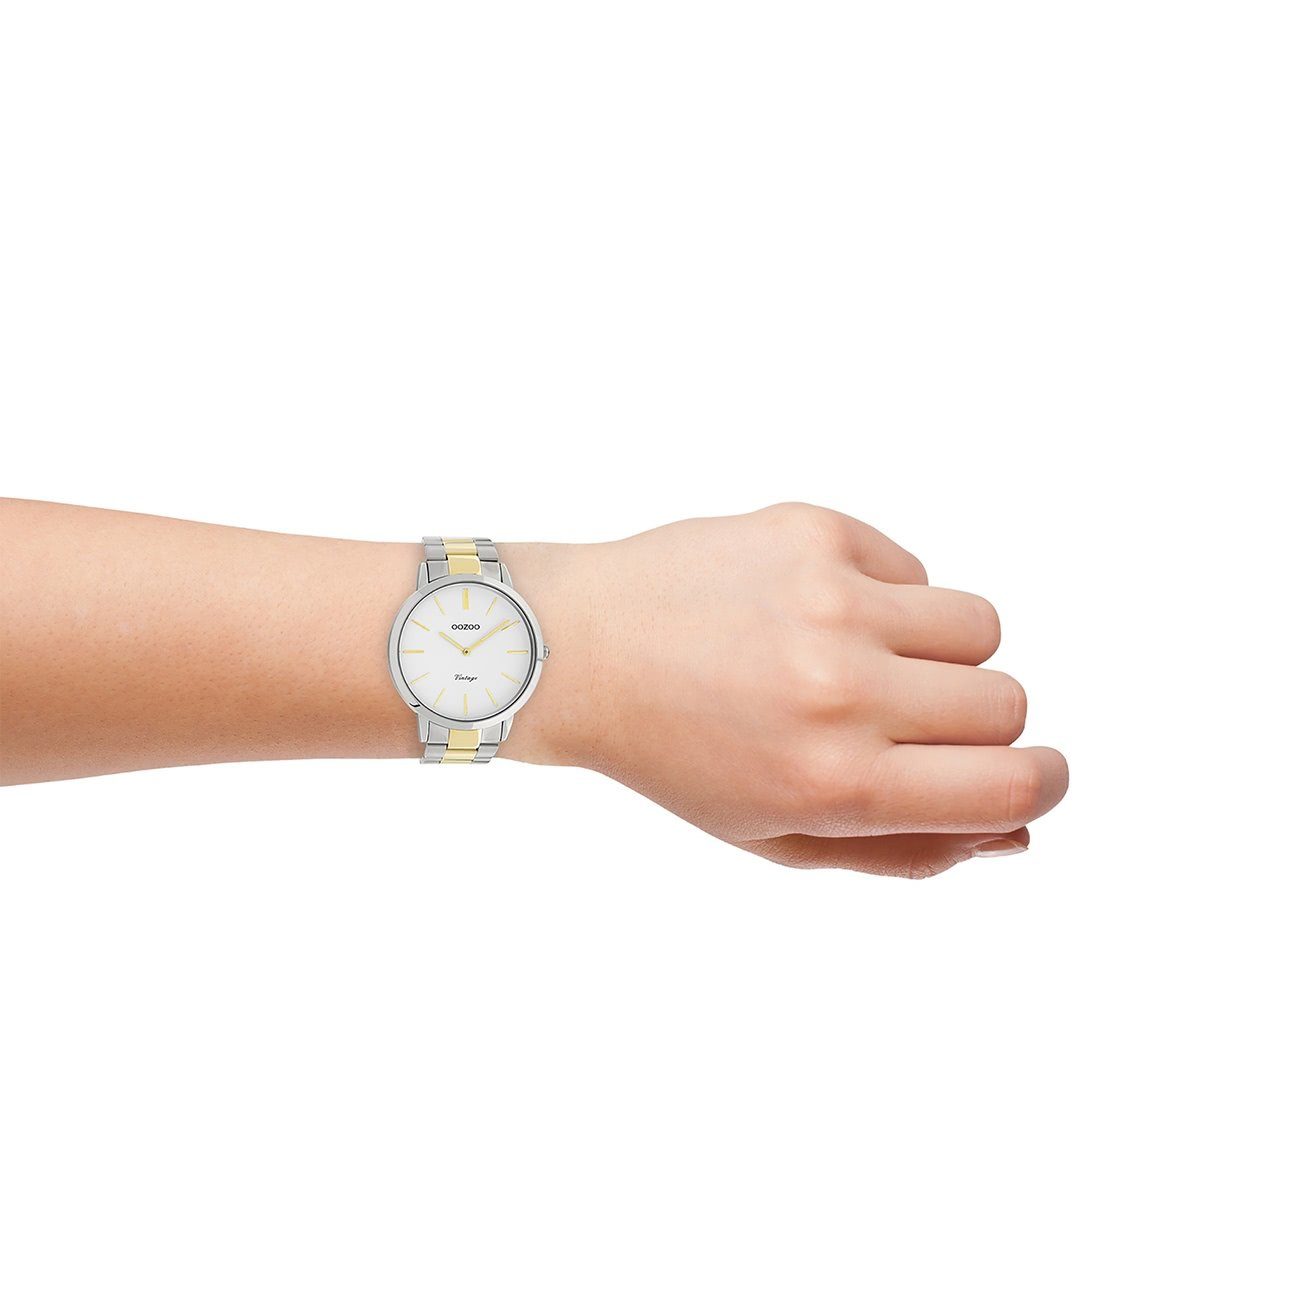 OOZOO Quarzuhr Oozoo Unisex Armbanduhr 42mm) silber Fashion-Style Edelstahlarmband, Damen, Herrenuhr gold Quarz, (ca. groß rund